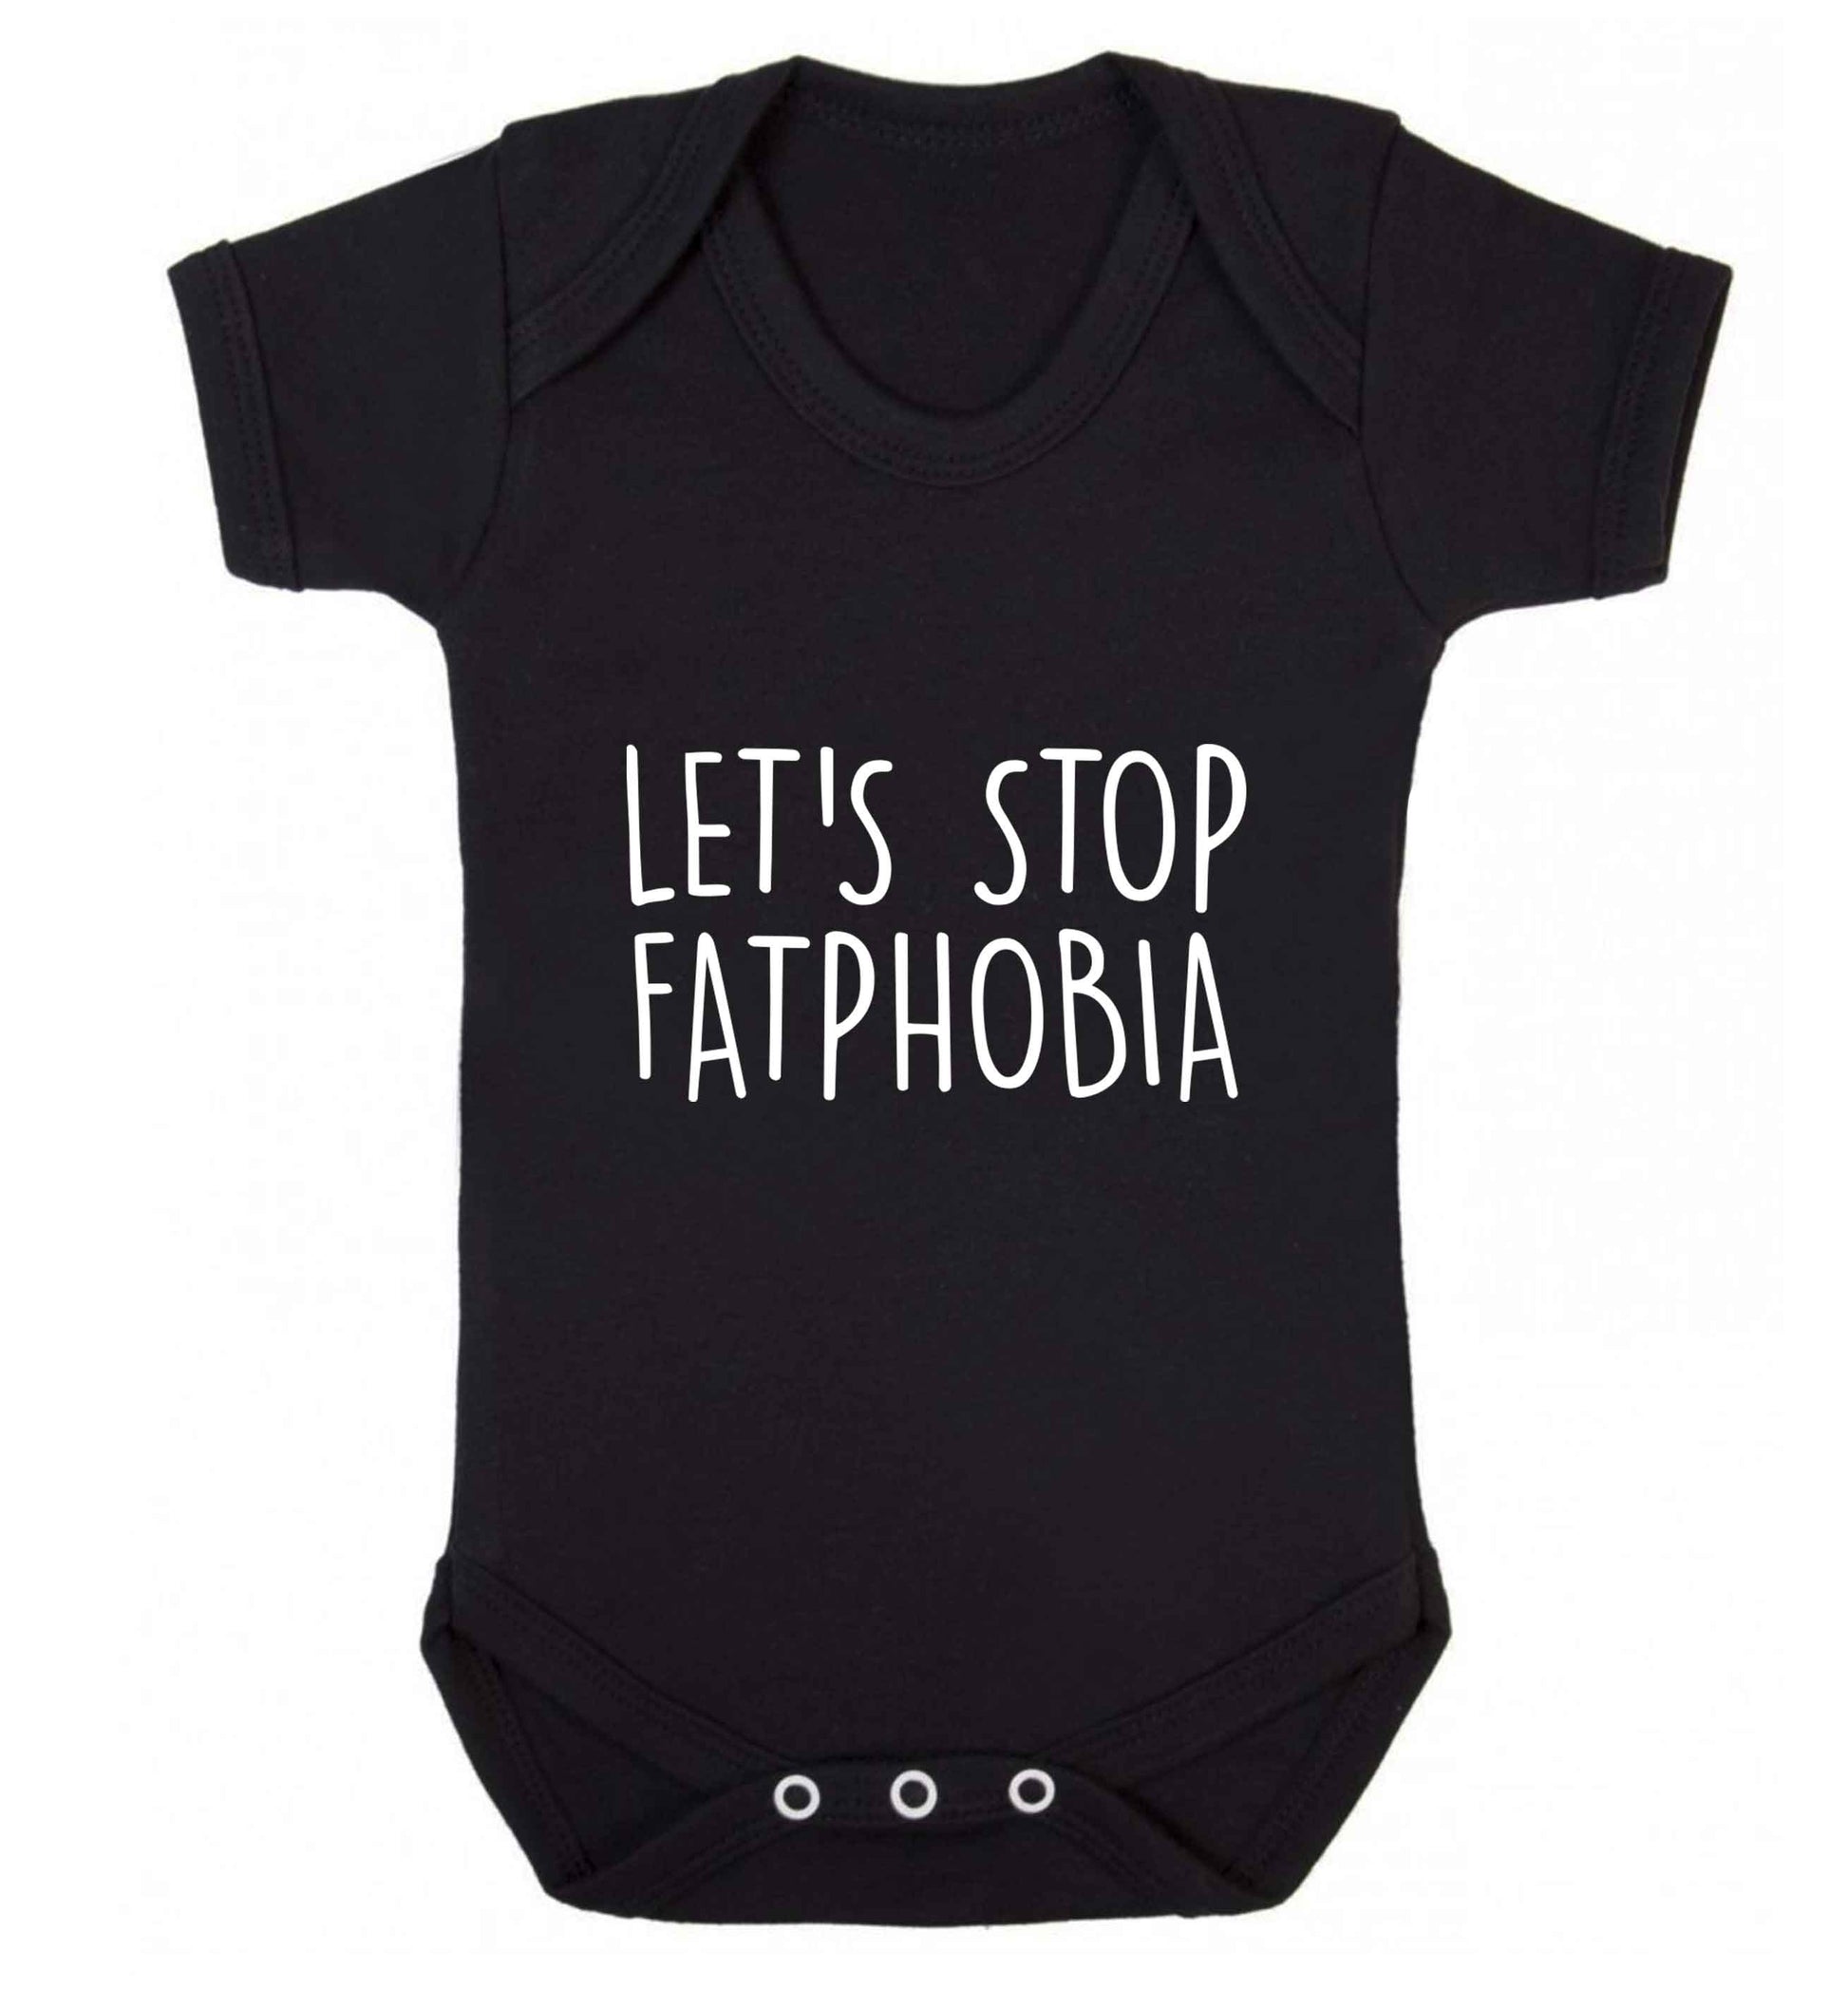 Let's stop fatphobia baby vest black 18-24 months